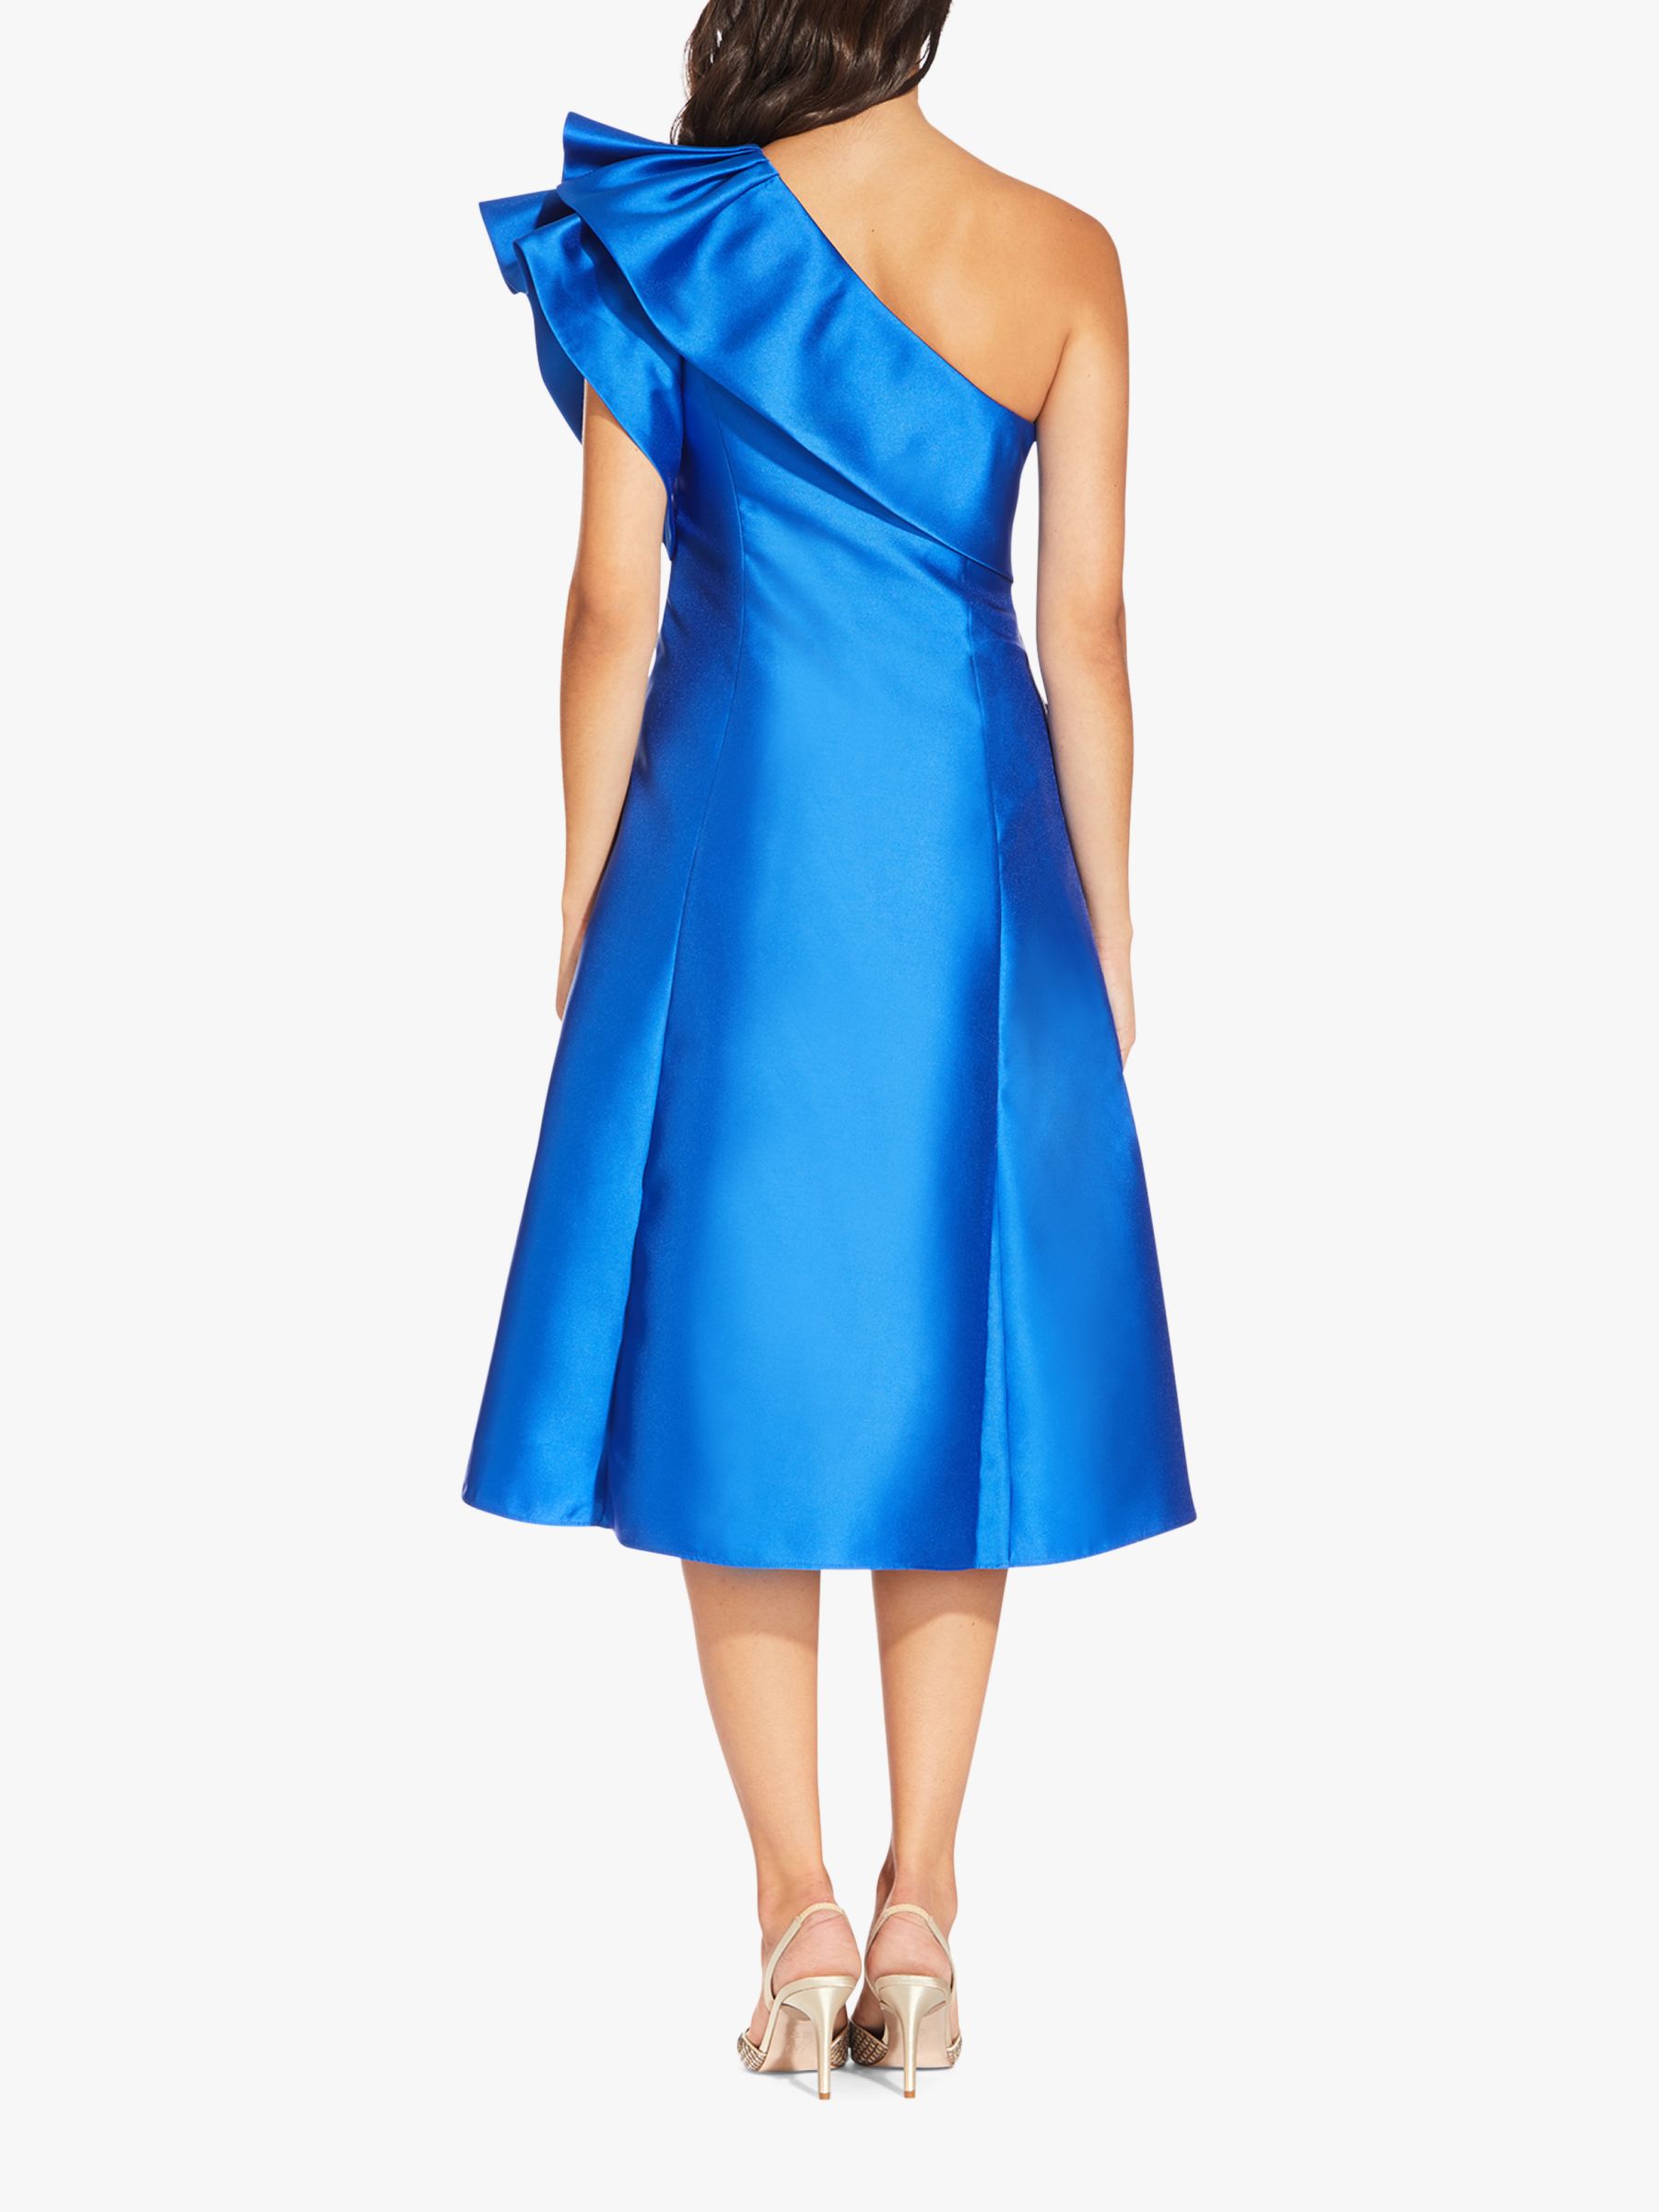 Adrianna Papell Short Mikado Dress, Yves Blue